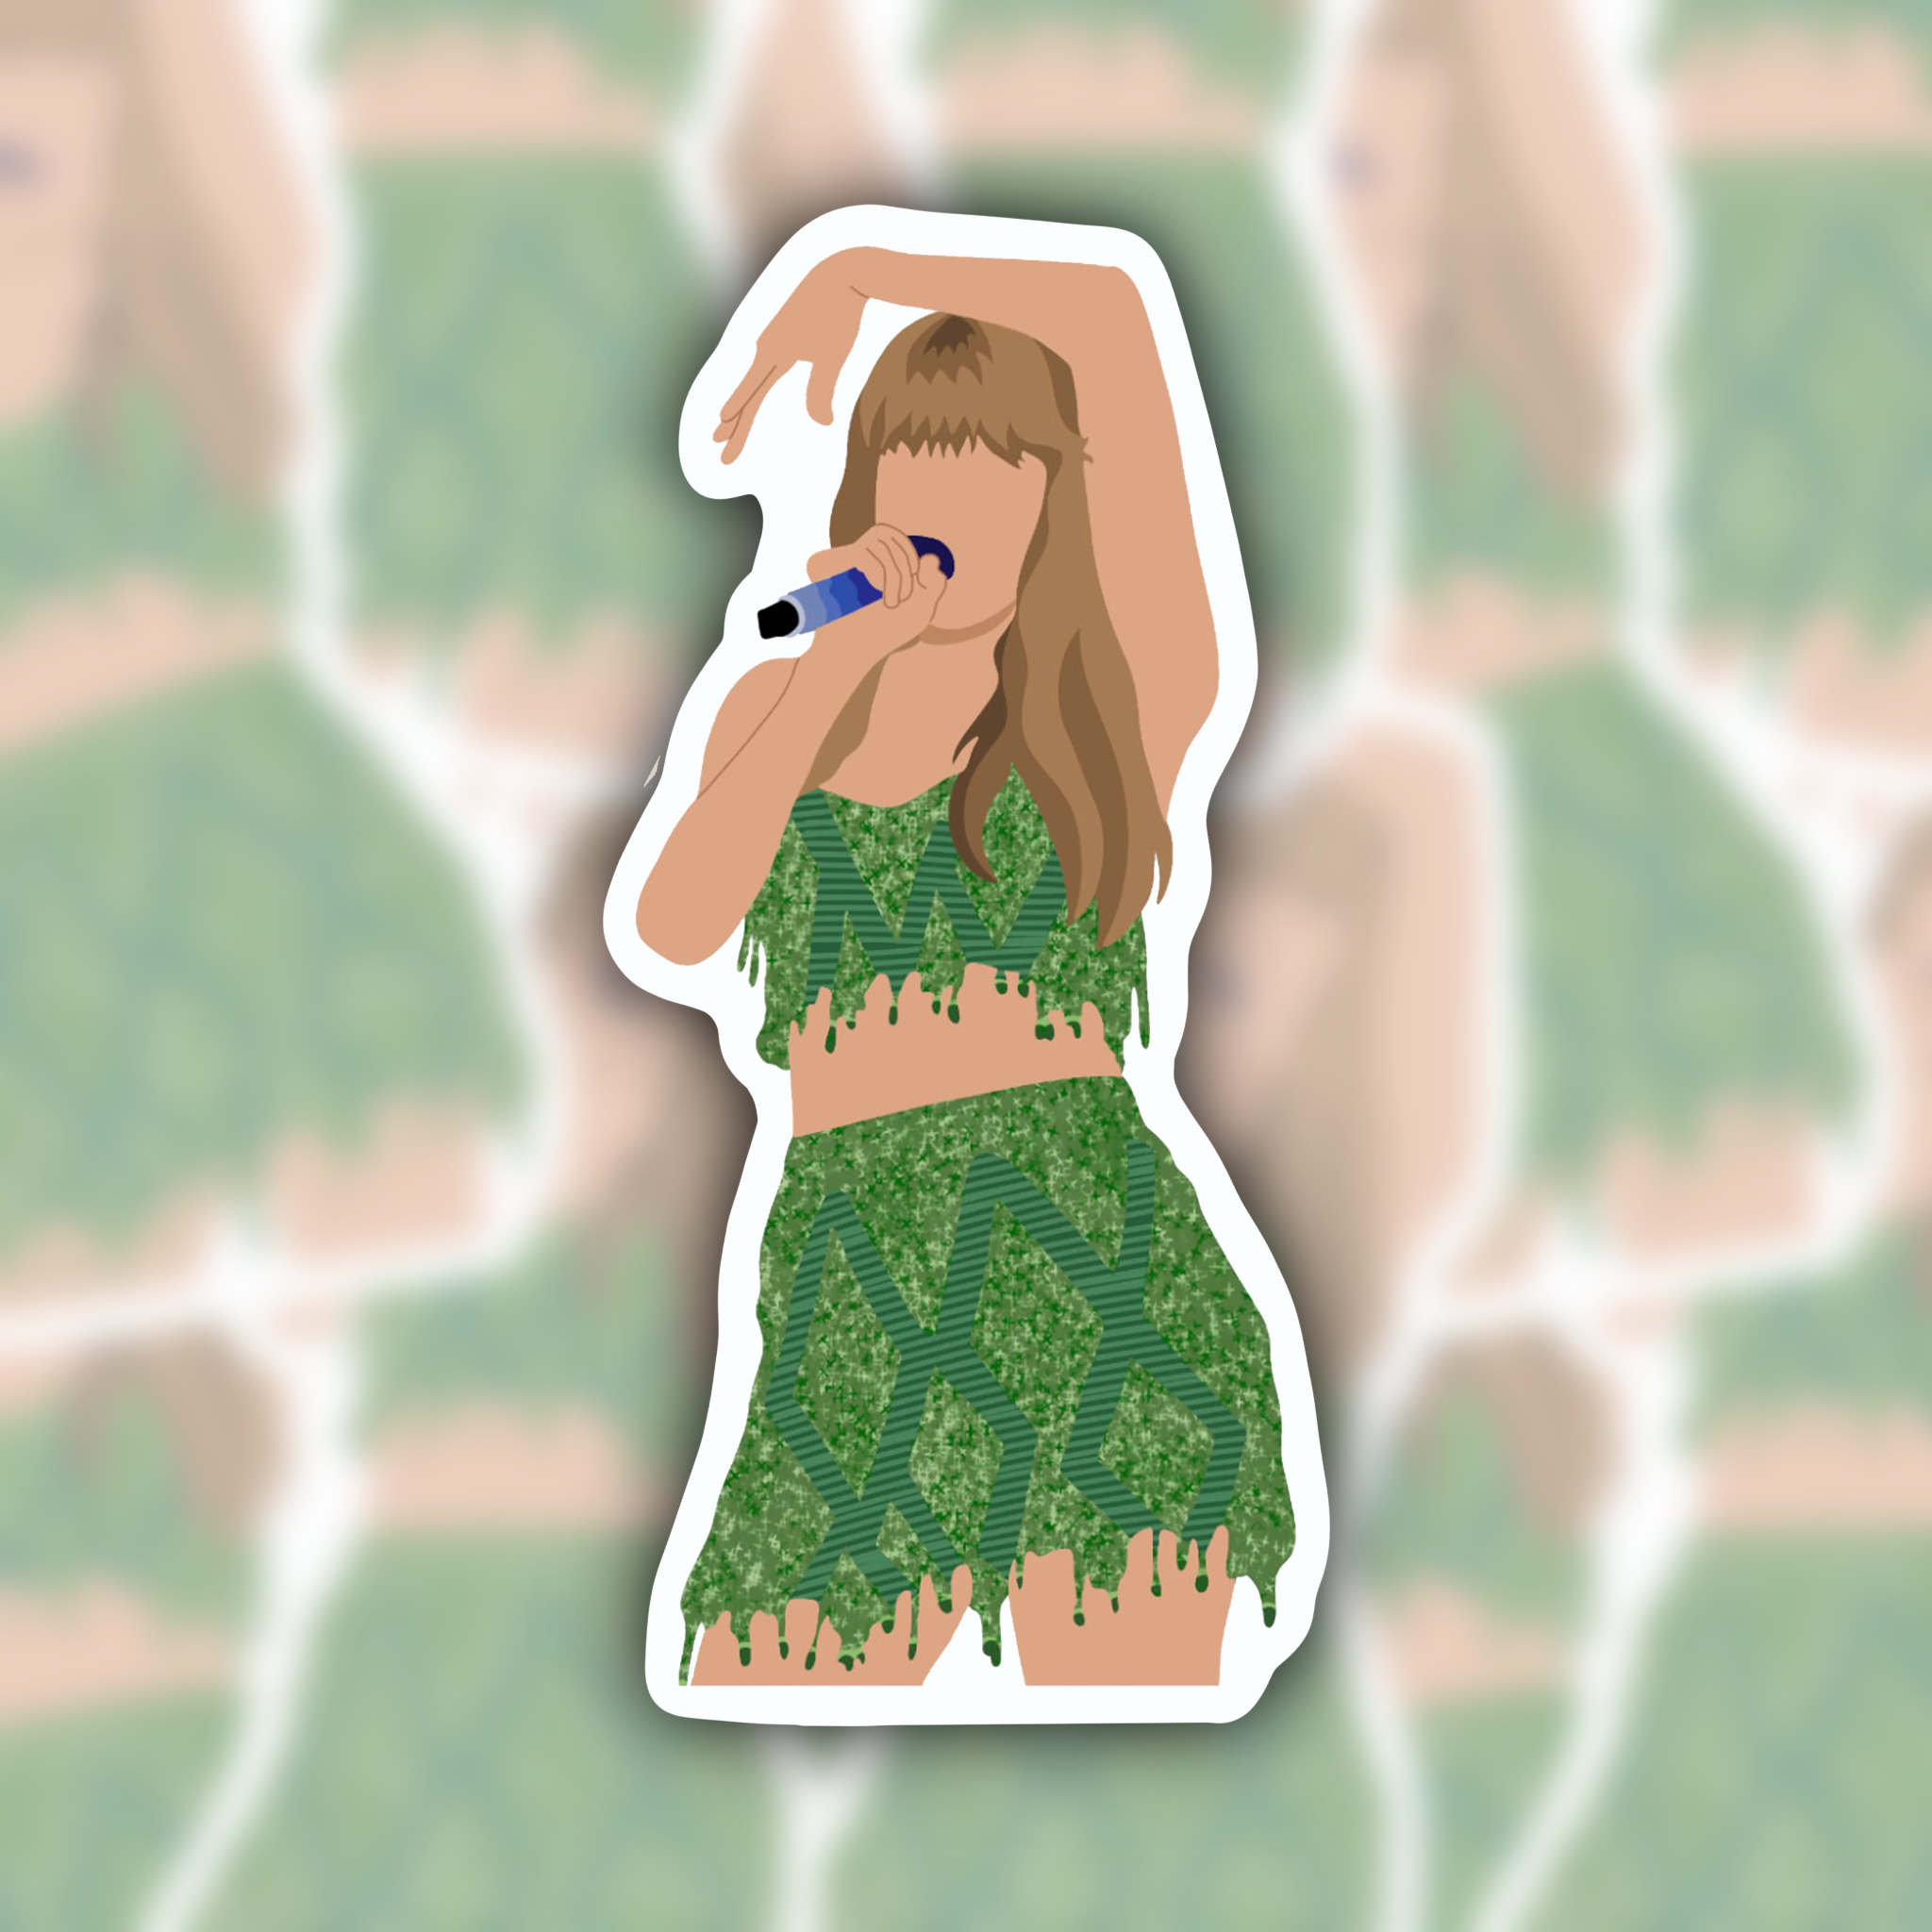 Taylor Swift sticker - Taylor Swift Eras Tour - RF Design Company - waterproof sticker